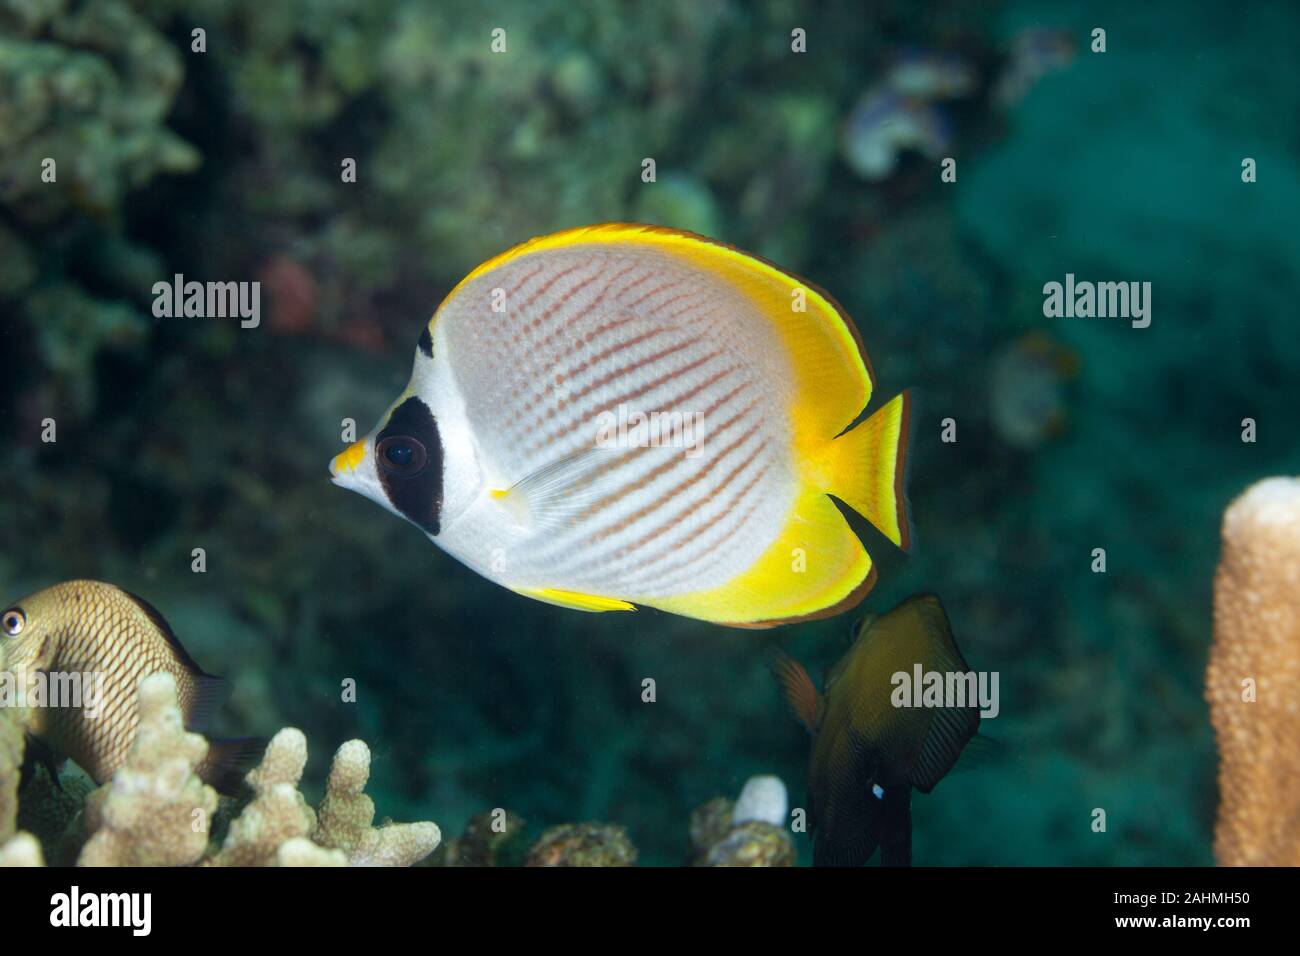 Philippine butterflyfish, Chaetodon adiergastos Stock Photo